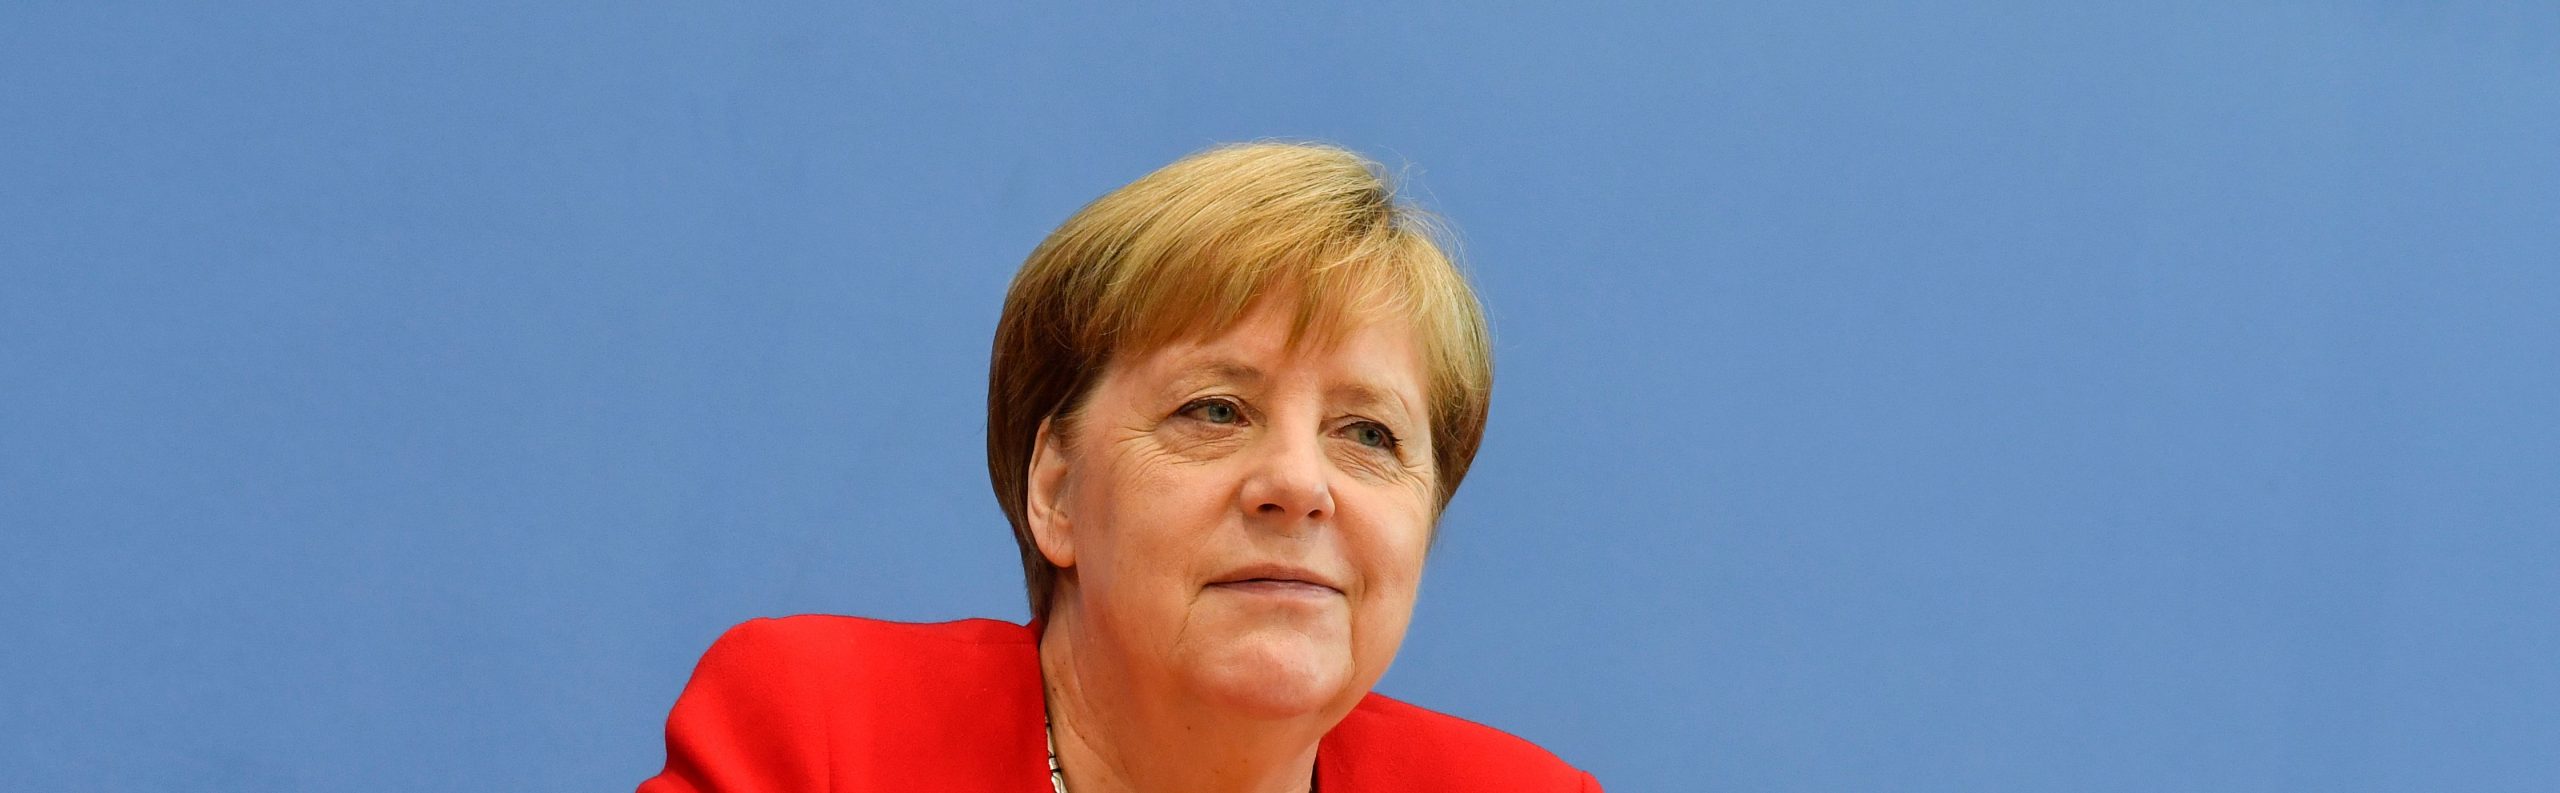 Angela Merkel in conferenza stampa (LaPresse)